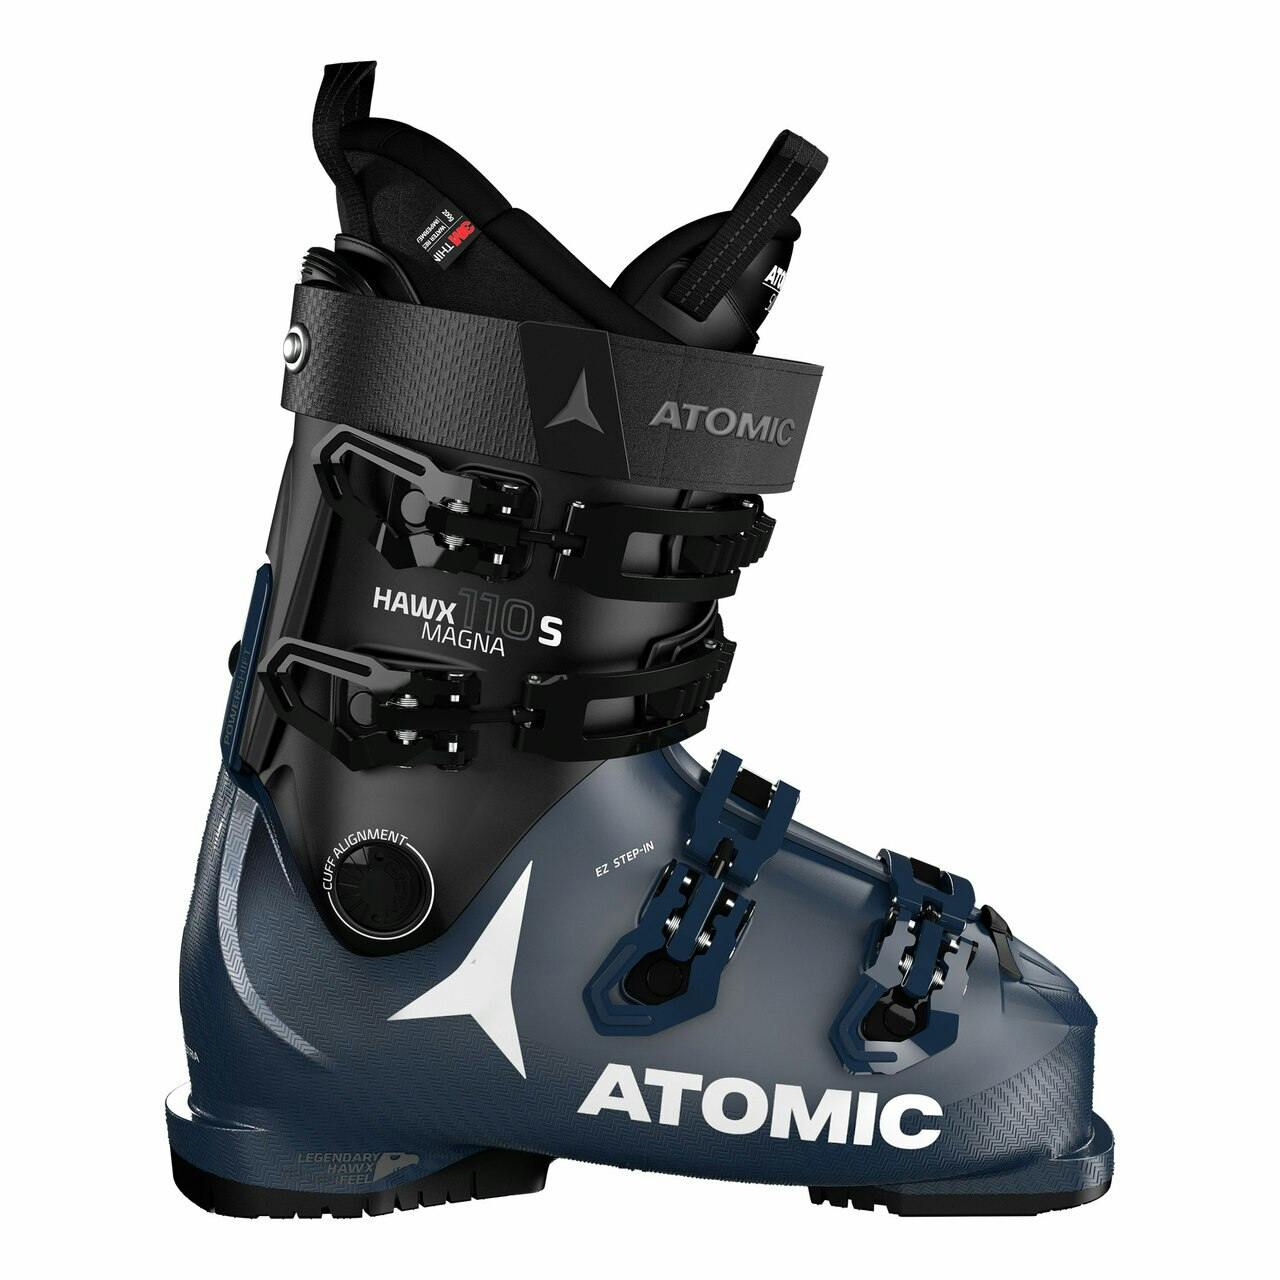 Atomic Hawx Magna 110 S Ski Boots · 2021